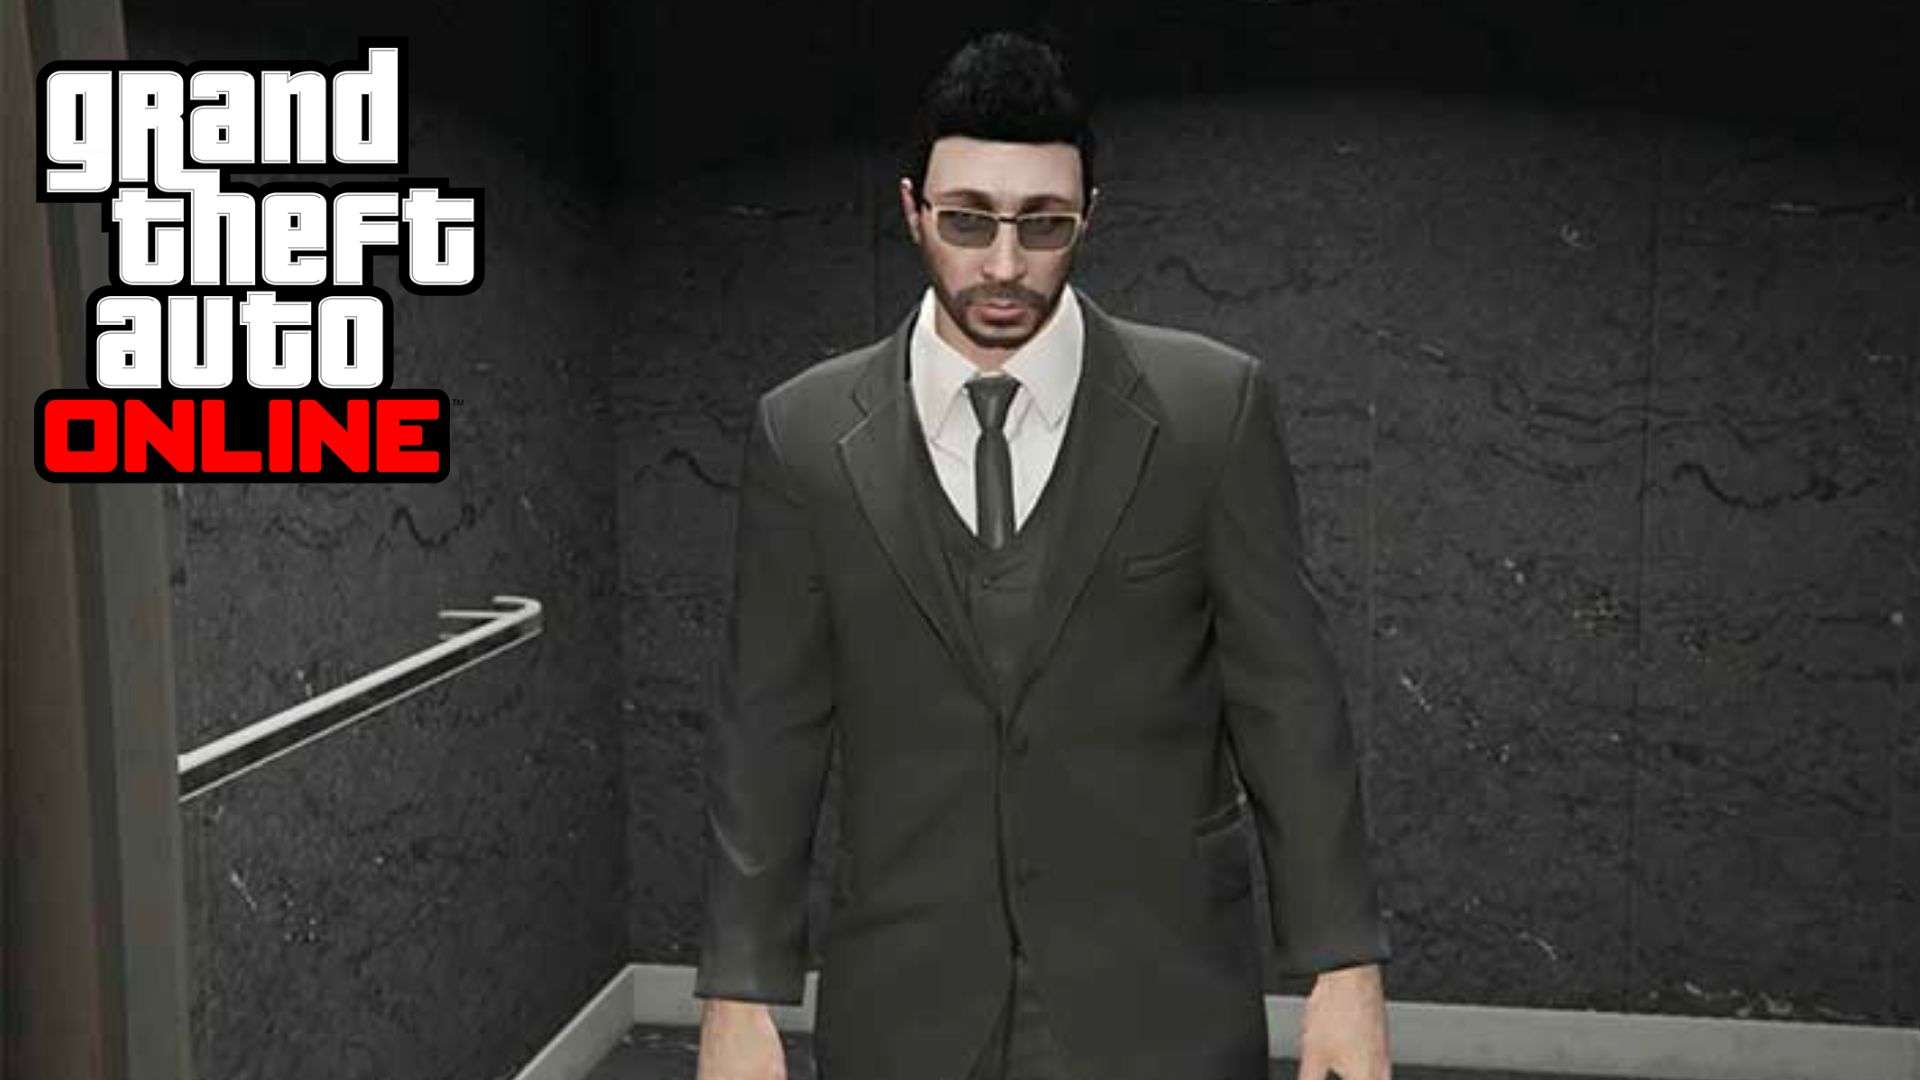 GTA Online character in suit stood in elevator